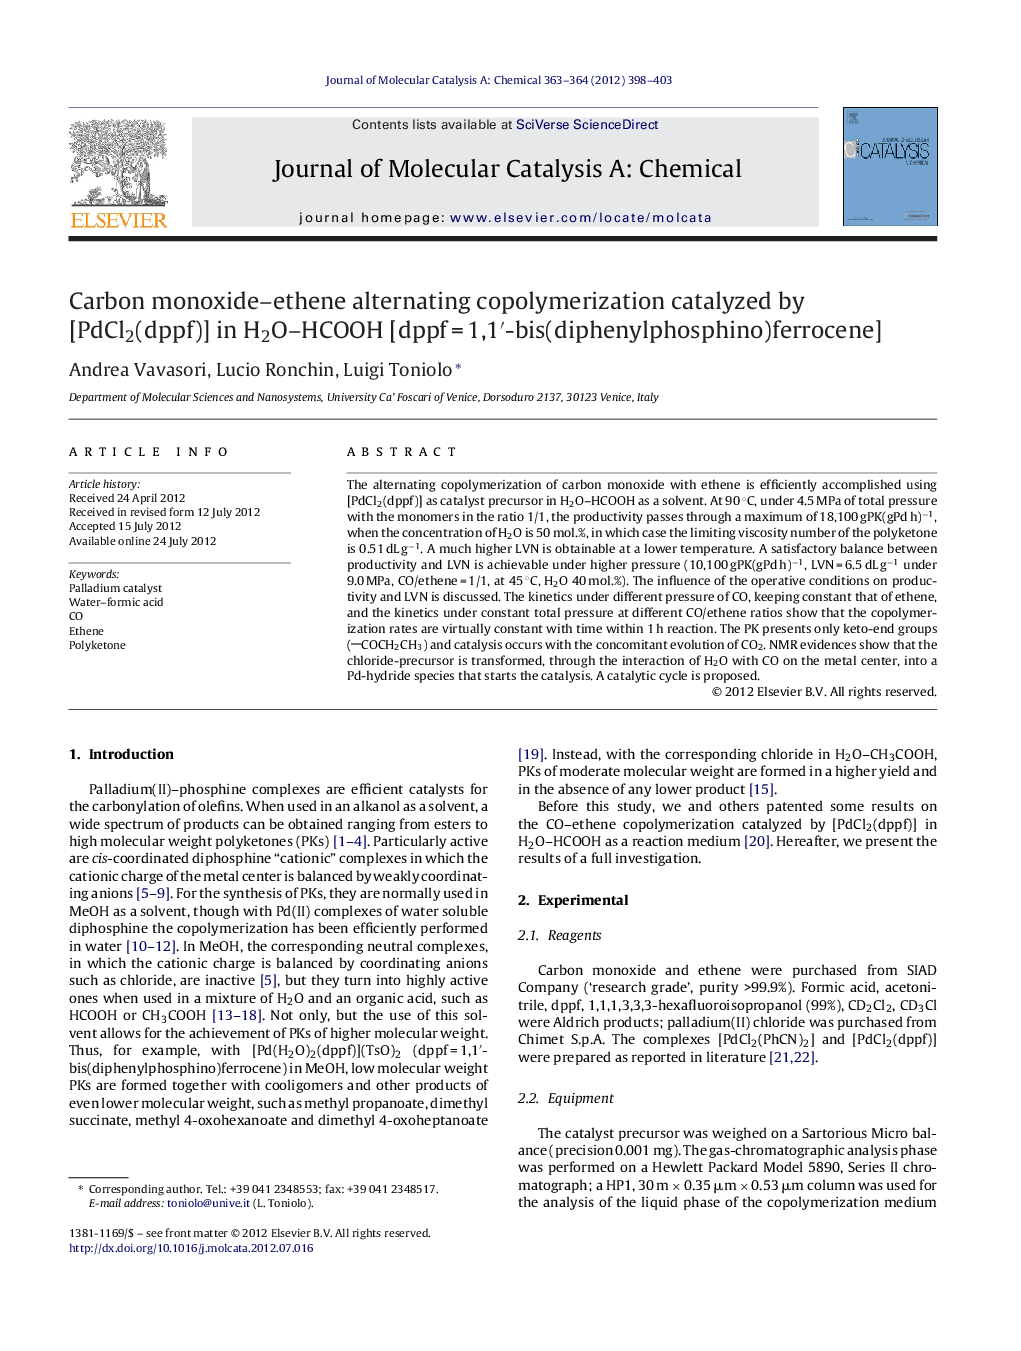 Carbon monoxide–ethene alternating copolymerization catalyzed by [PdCl2(dppf)] in H2O–HCOOH [dppf = 1,1′-bis(diphenylphosphino)ferrocene]